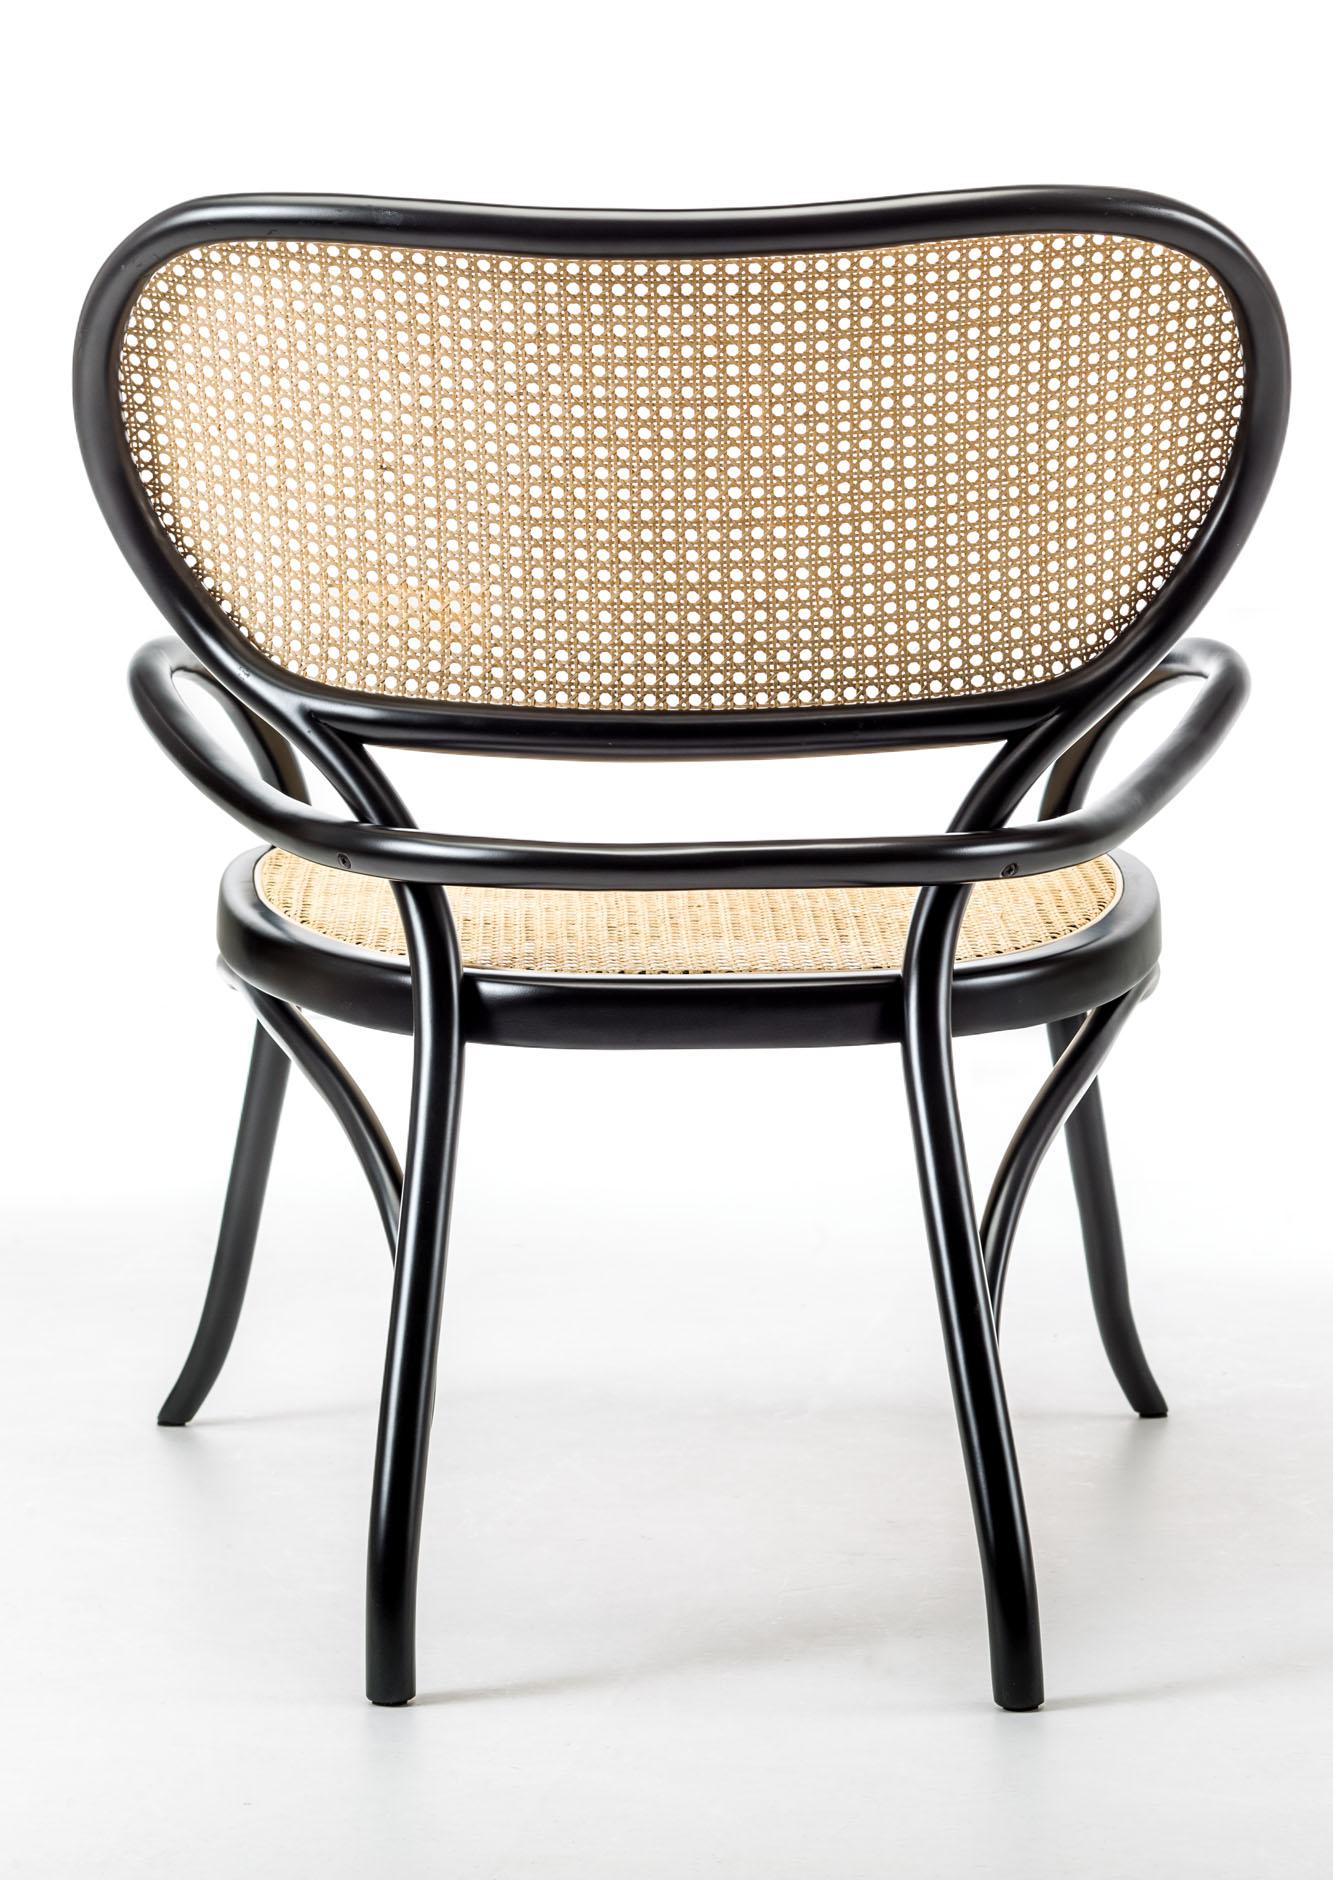 Modern Gebrüder Thonet Vienna GmbH Lehnstuhl Lounge Chair in Black with Woven Cane Seat For Sale